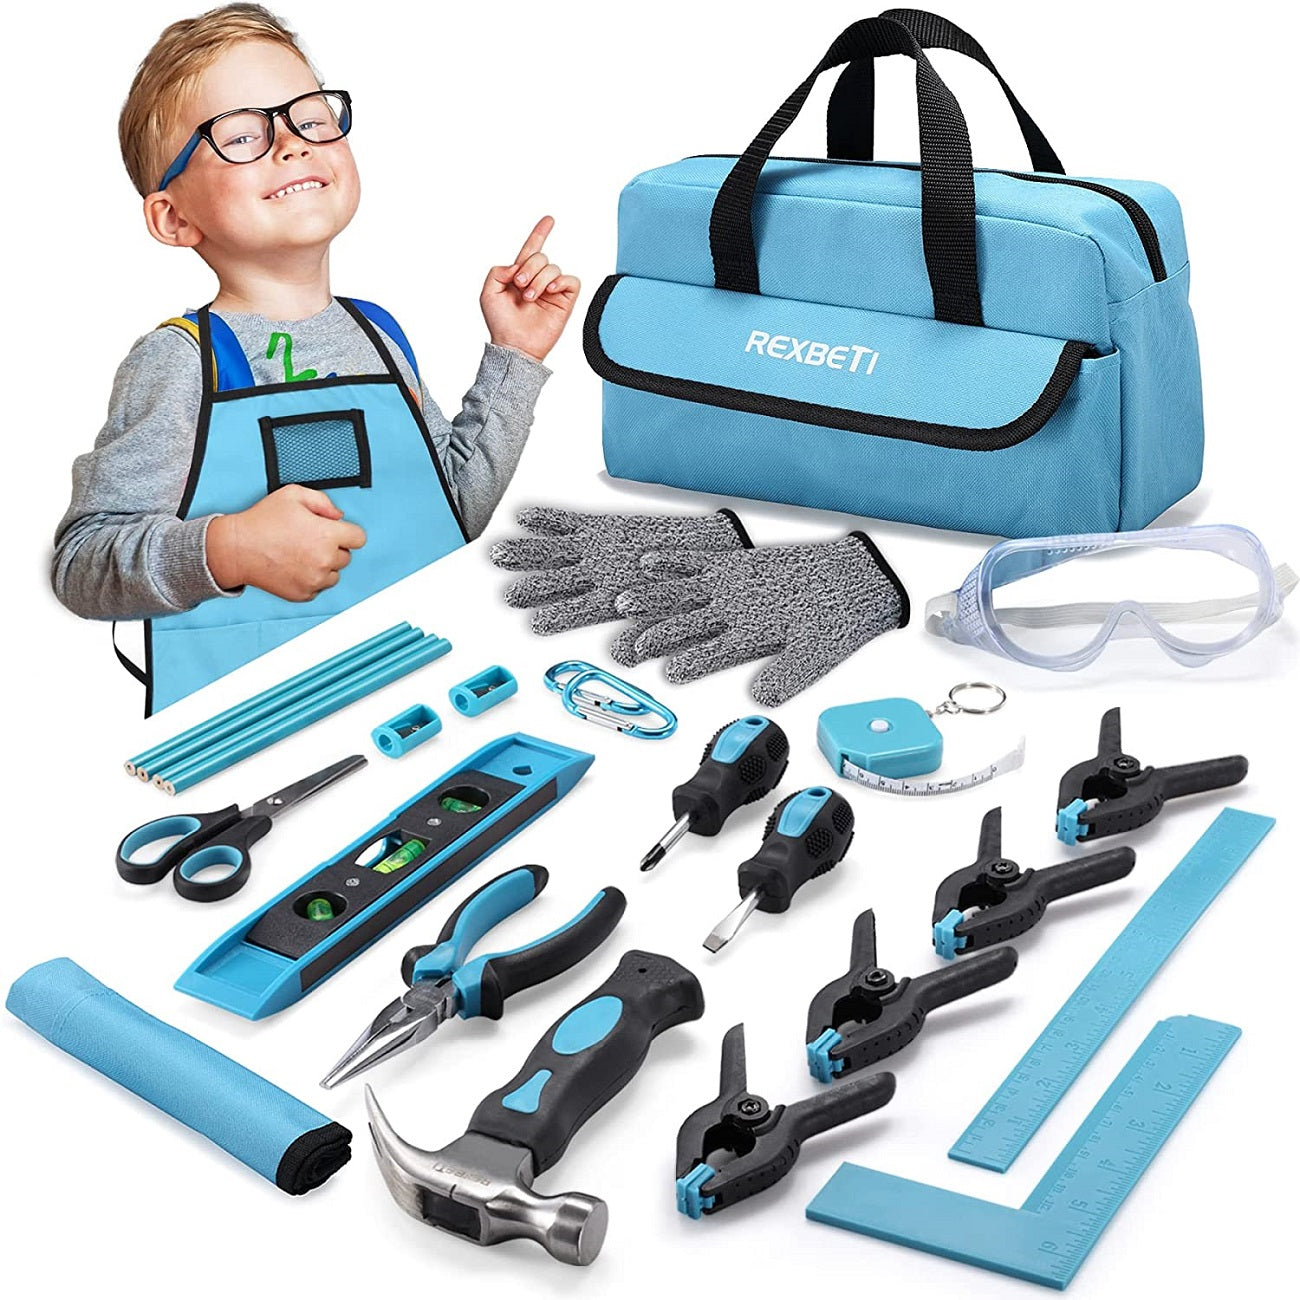 REXBETI 25-Piece Kids Tool Set with Real Hand Tools, Blue Storage Bag